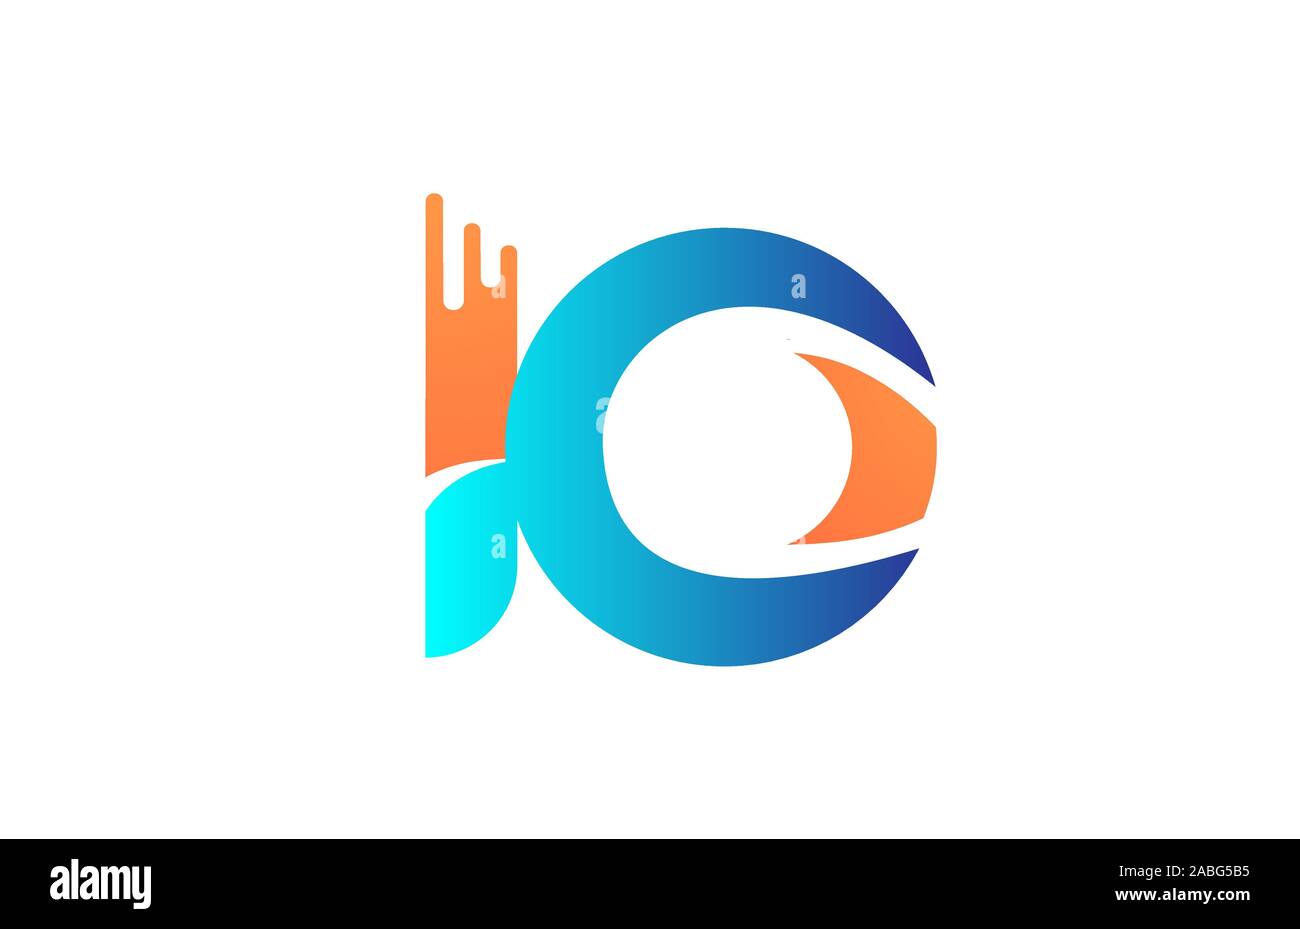 orange blue logo design